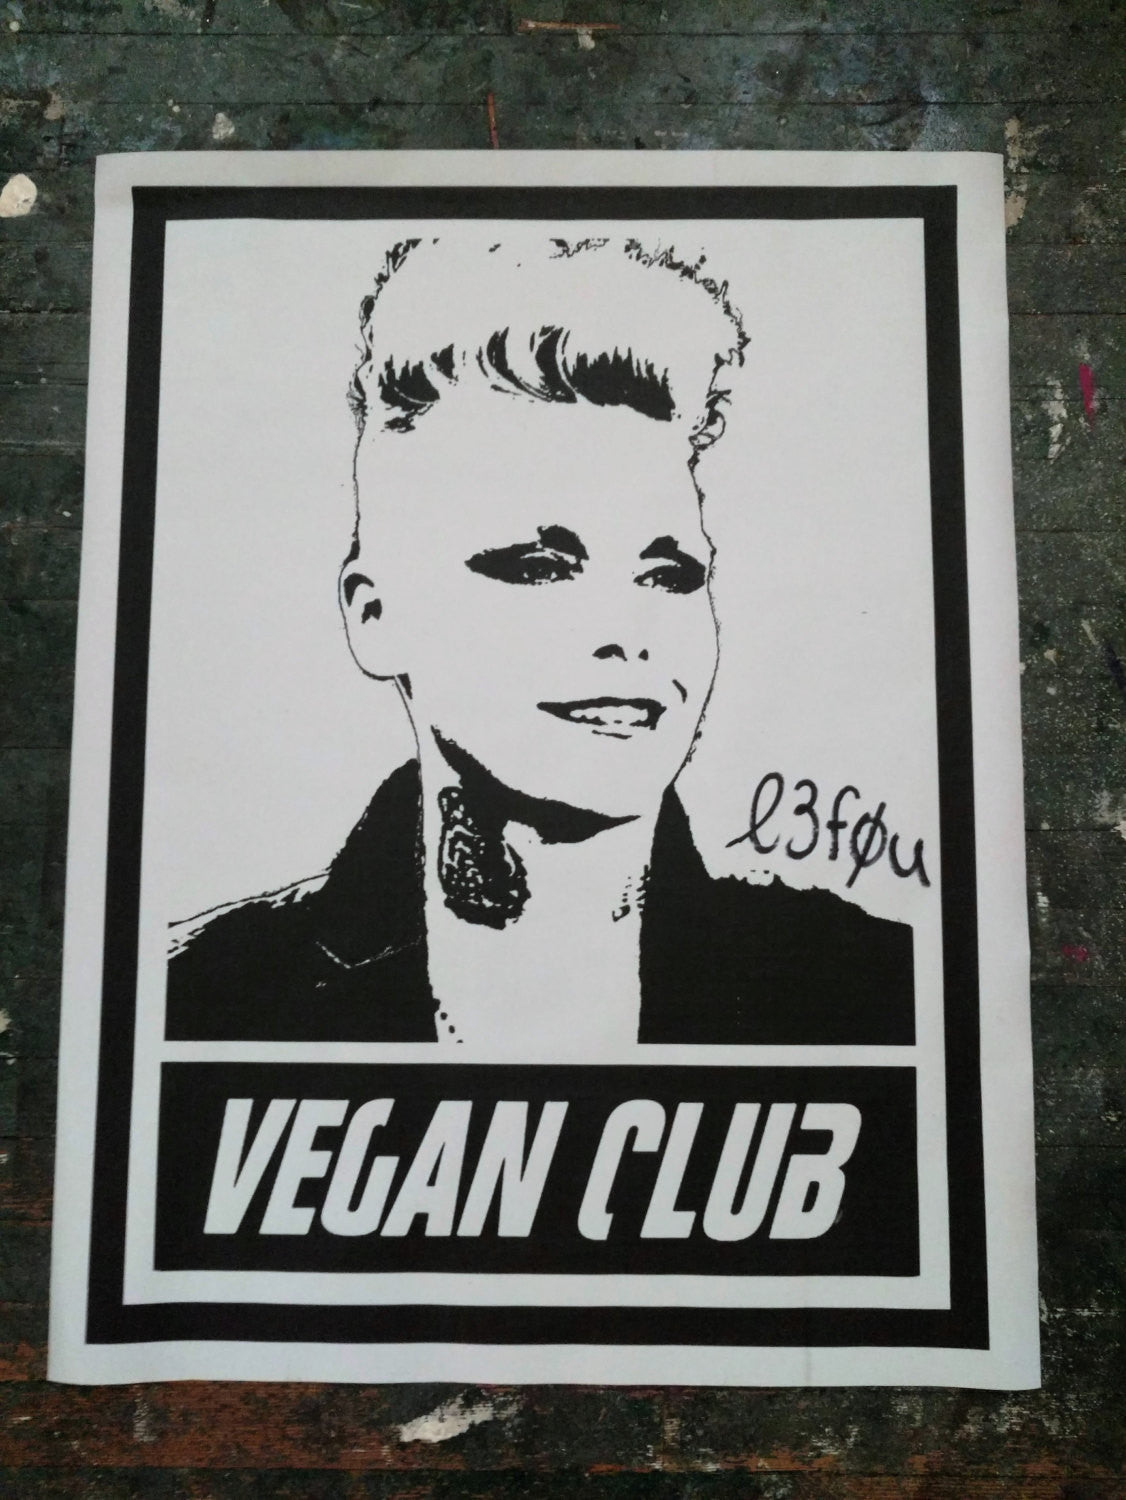 Street Art NewsPrint Poster Vegan Club featuring OTEP Signed L3f0u - model @otep & pic by @chefitophoto